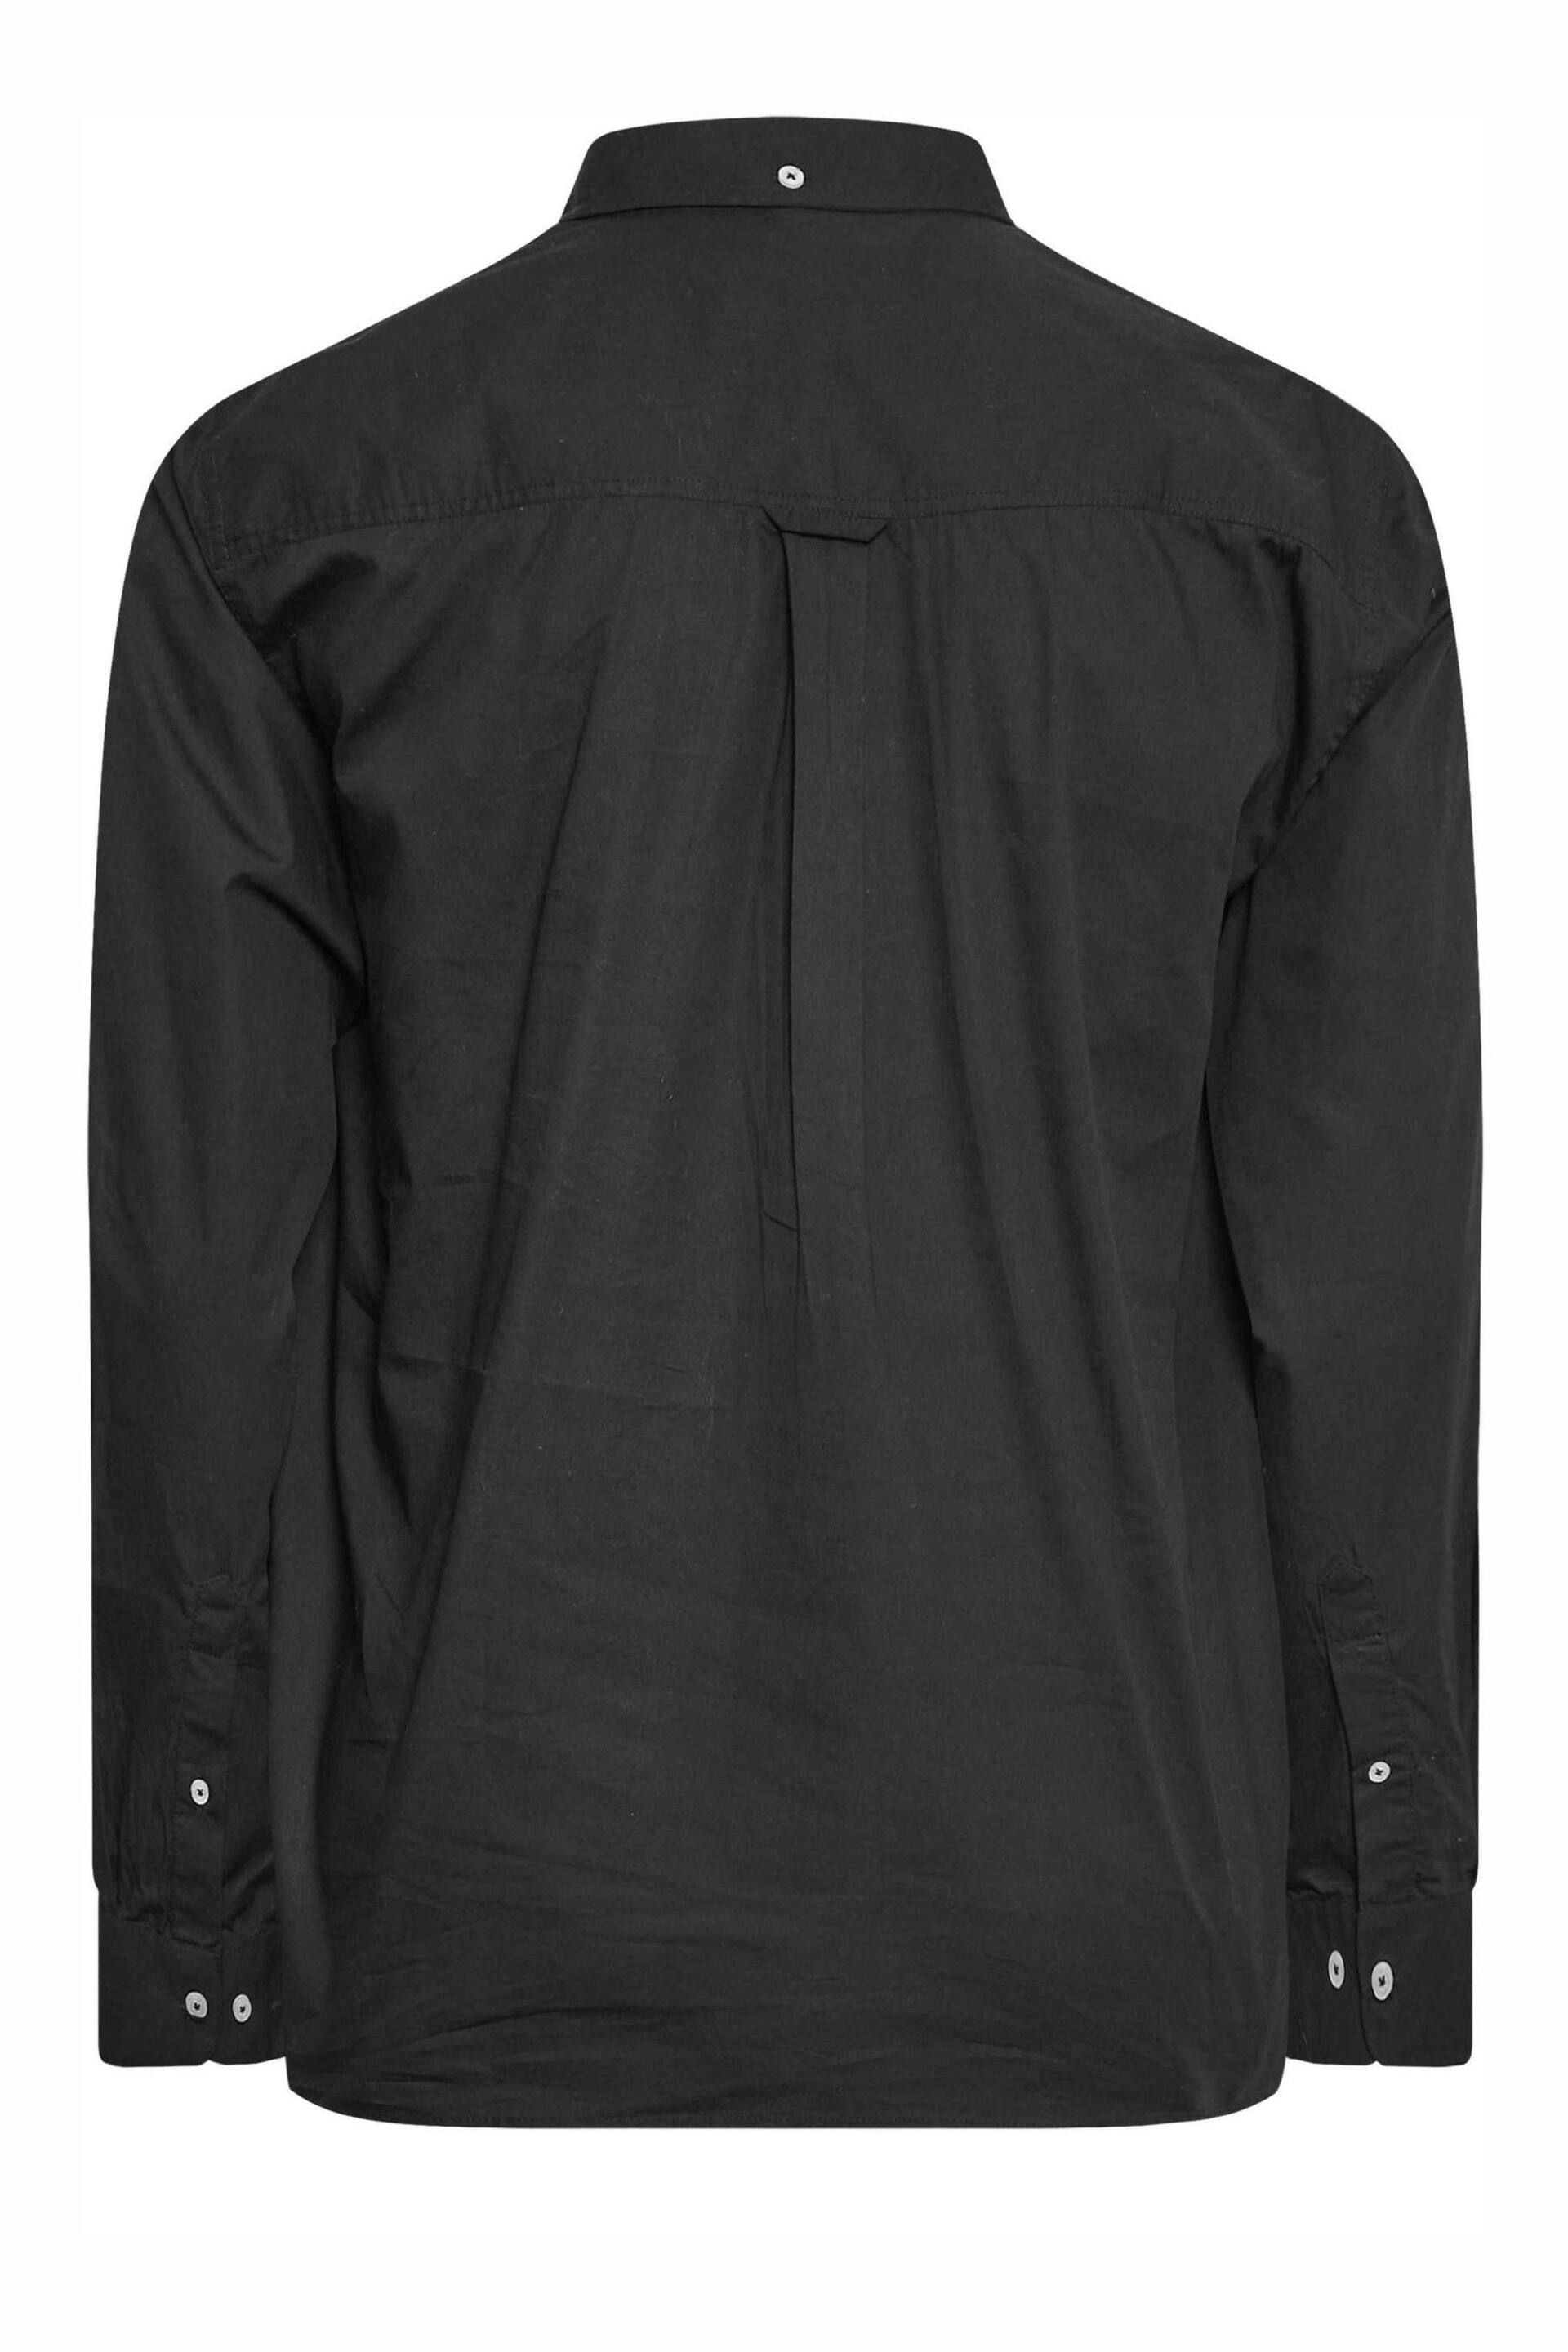 BadRhino Big & Tall Black Long Sleeve Poplin Shirt - Image 2 of 3